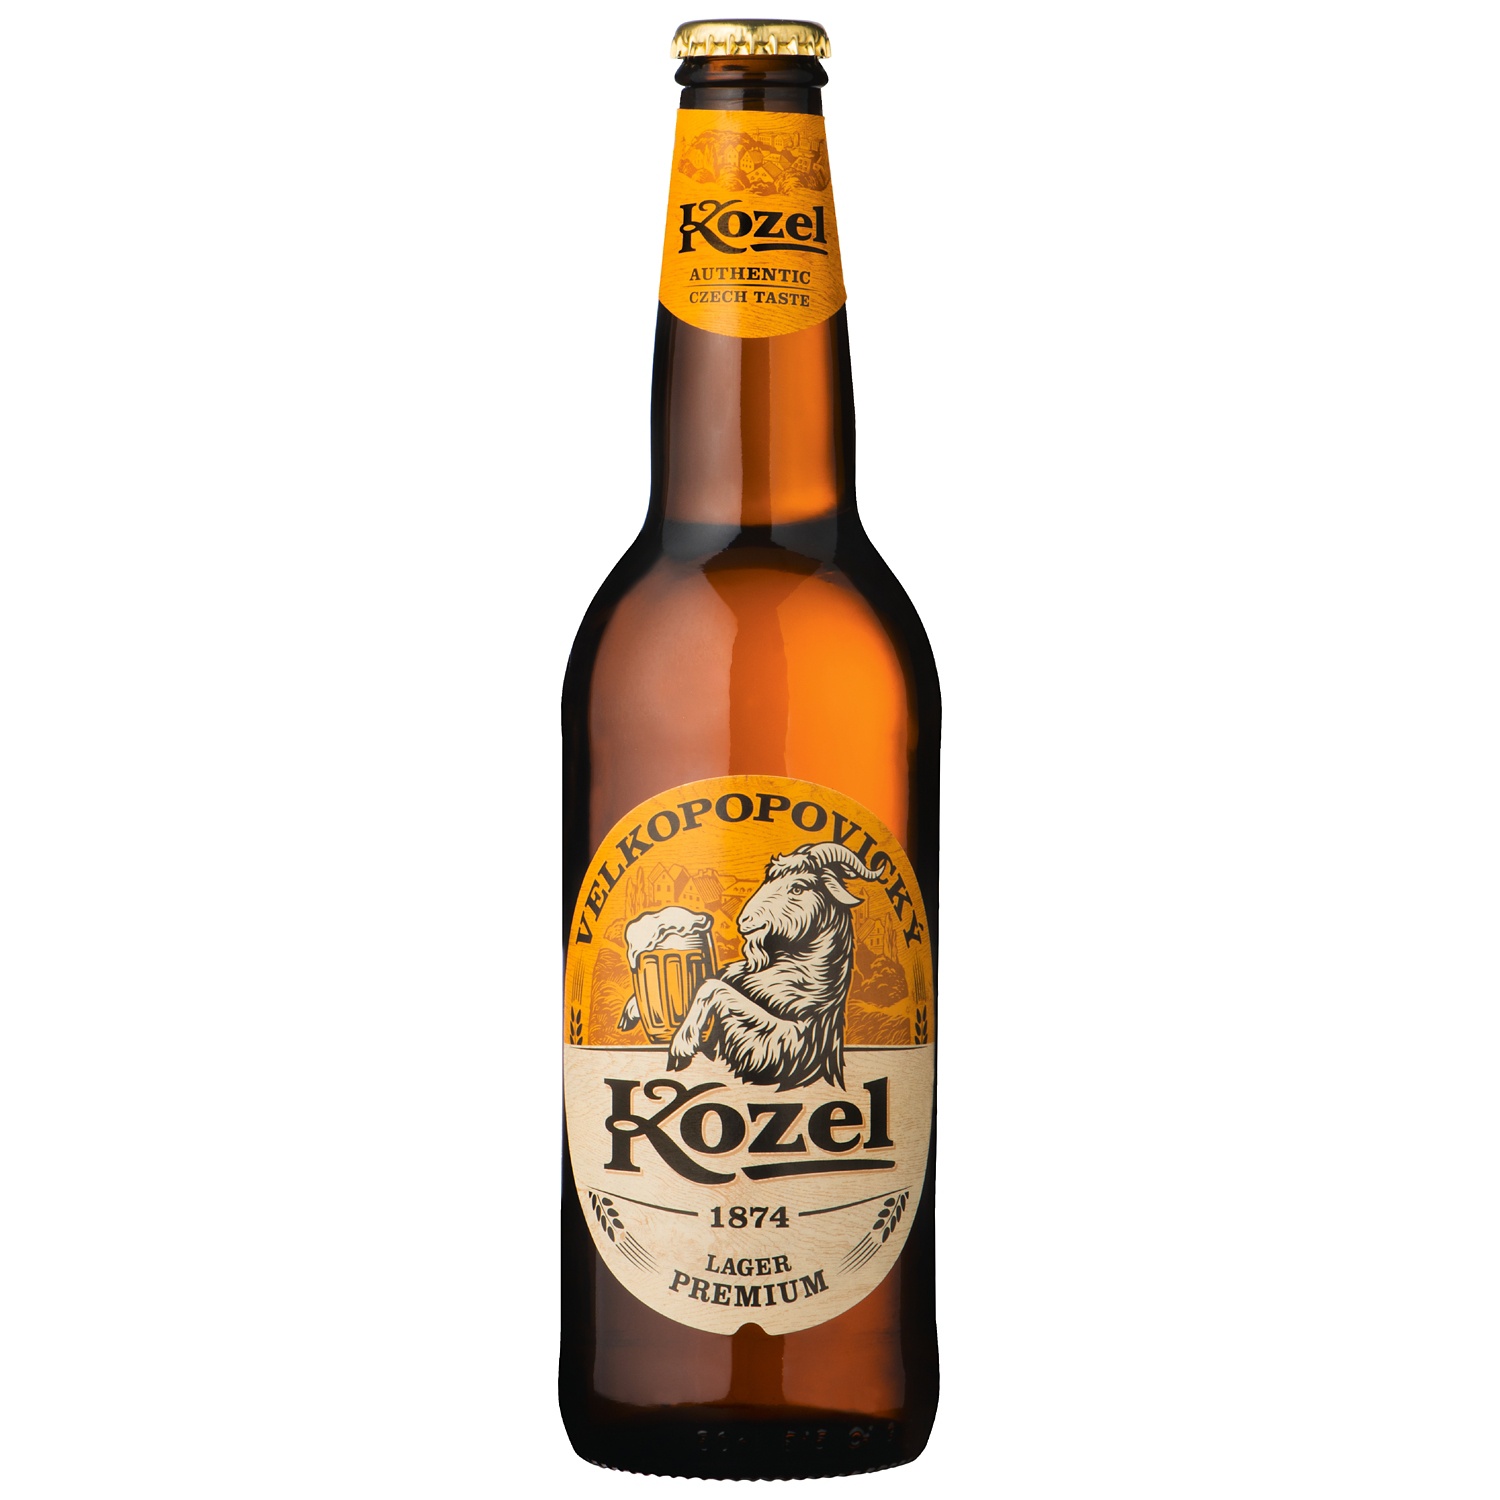 KOZEL Tschechisches Bier